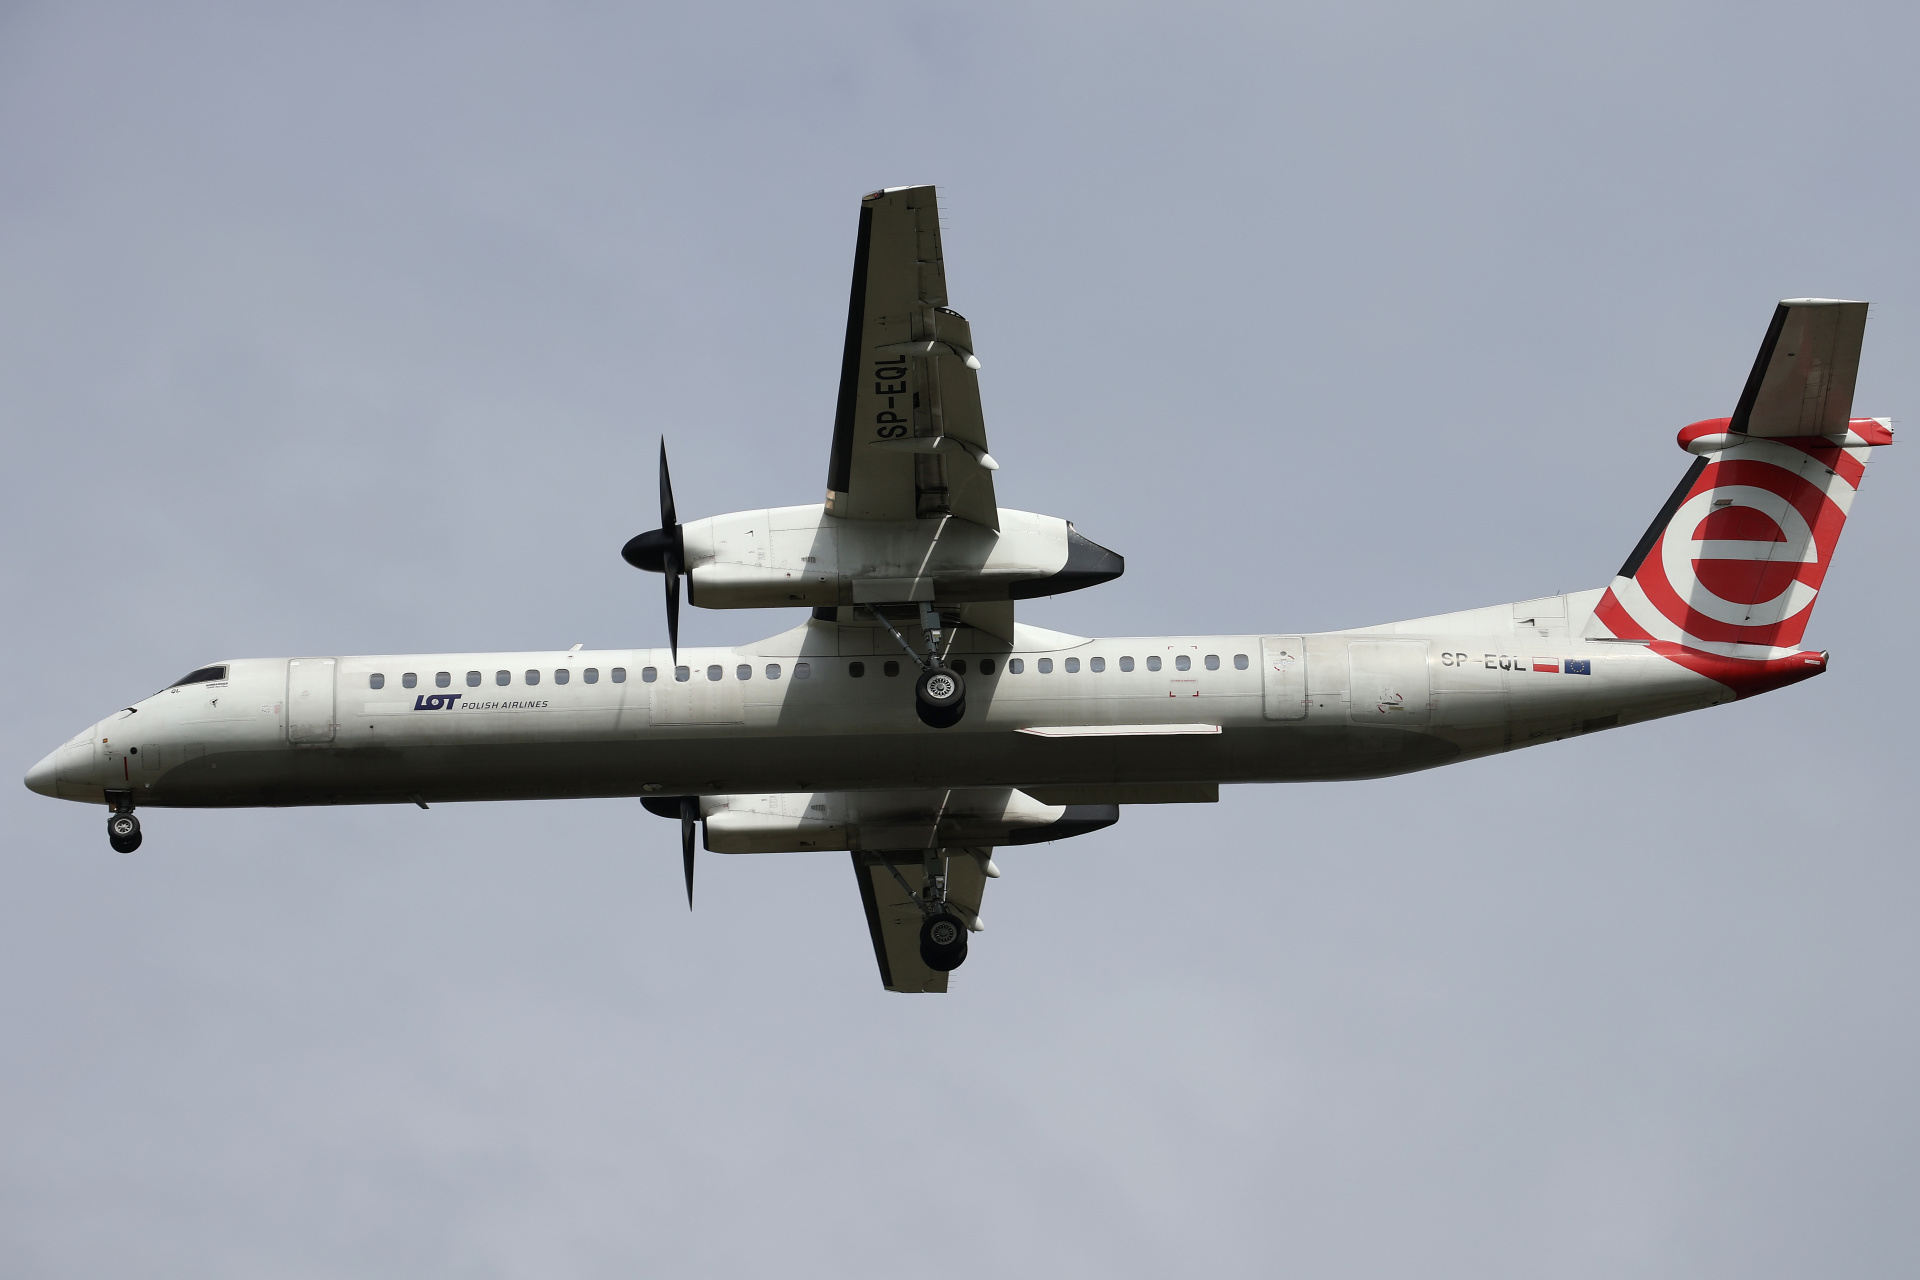 SP-EQL (EuroLOT partial livery) (Aircraft » EPWA Spotting » De Havilland Canada DHC-8 Dash 8 » LOT Polish Airlines)